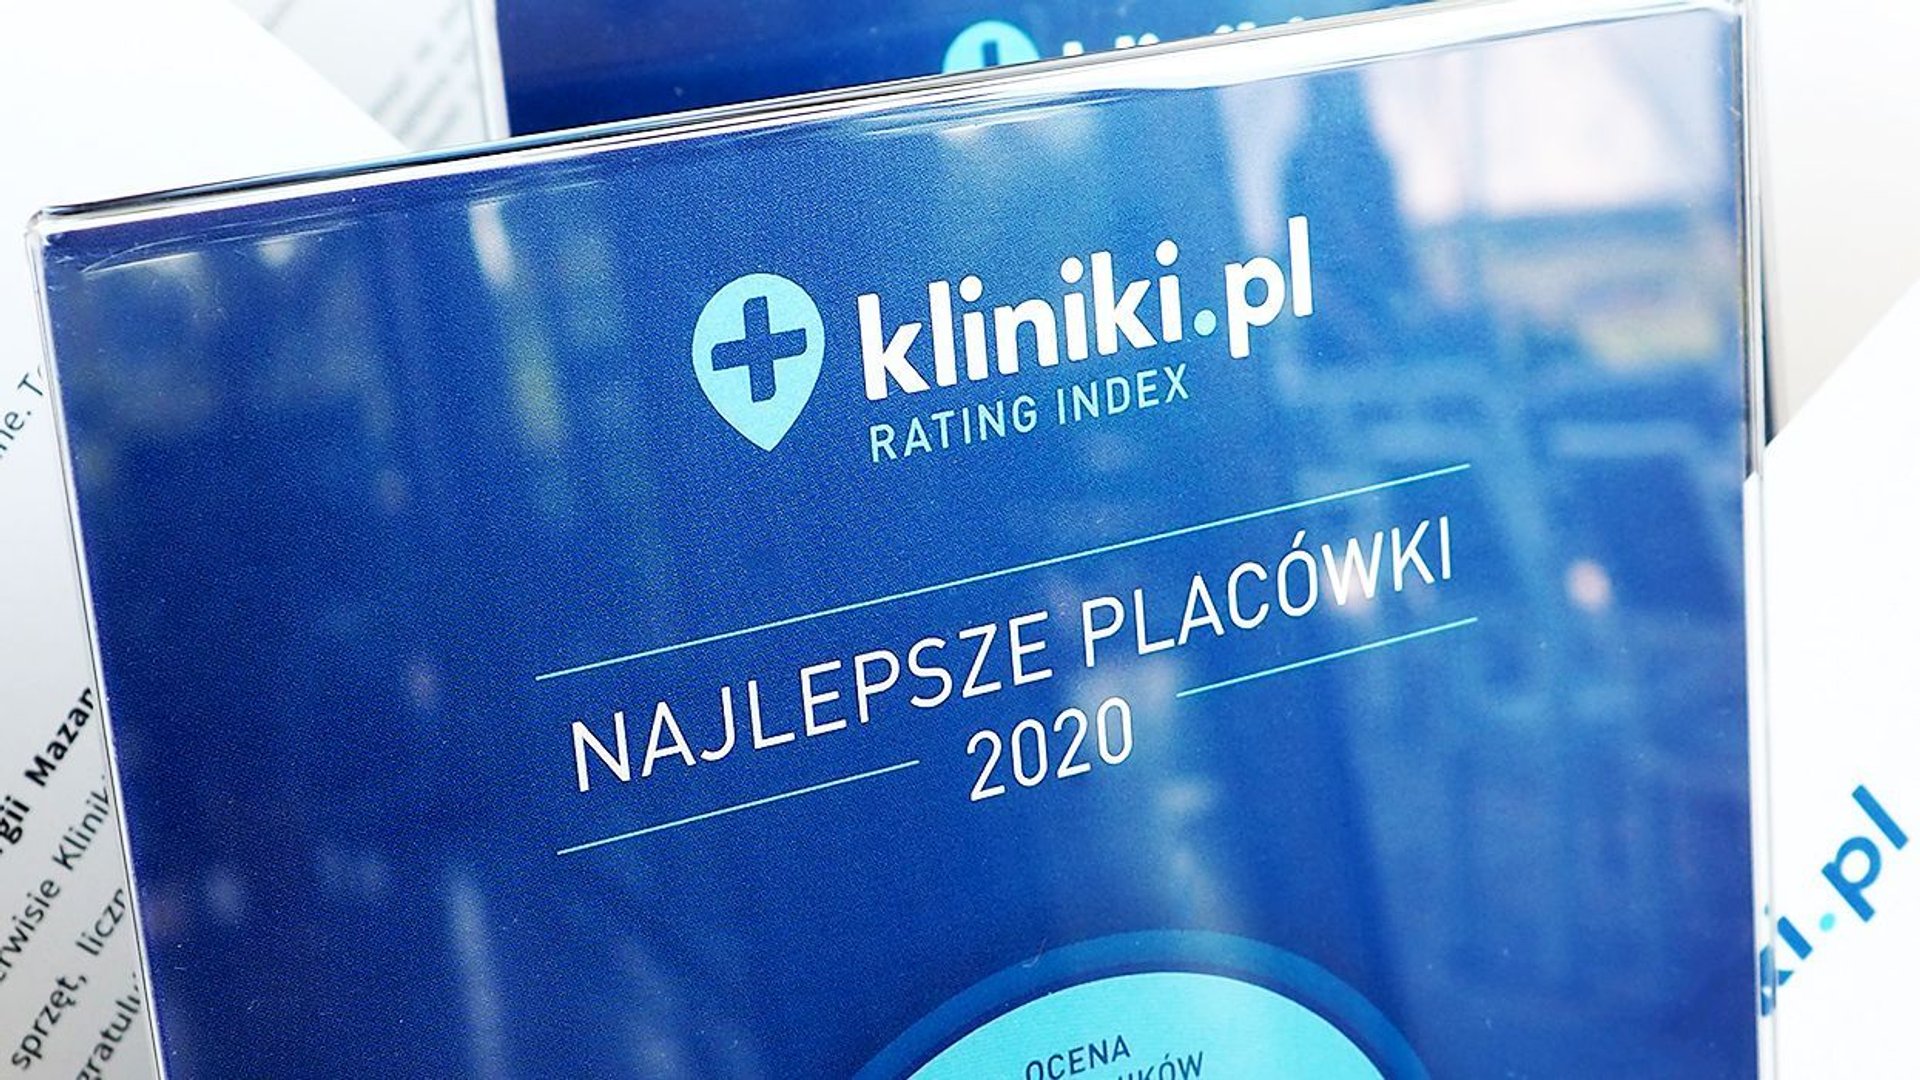 Kliniki.pl Gala Rating Index 2020